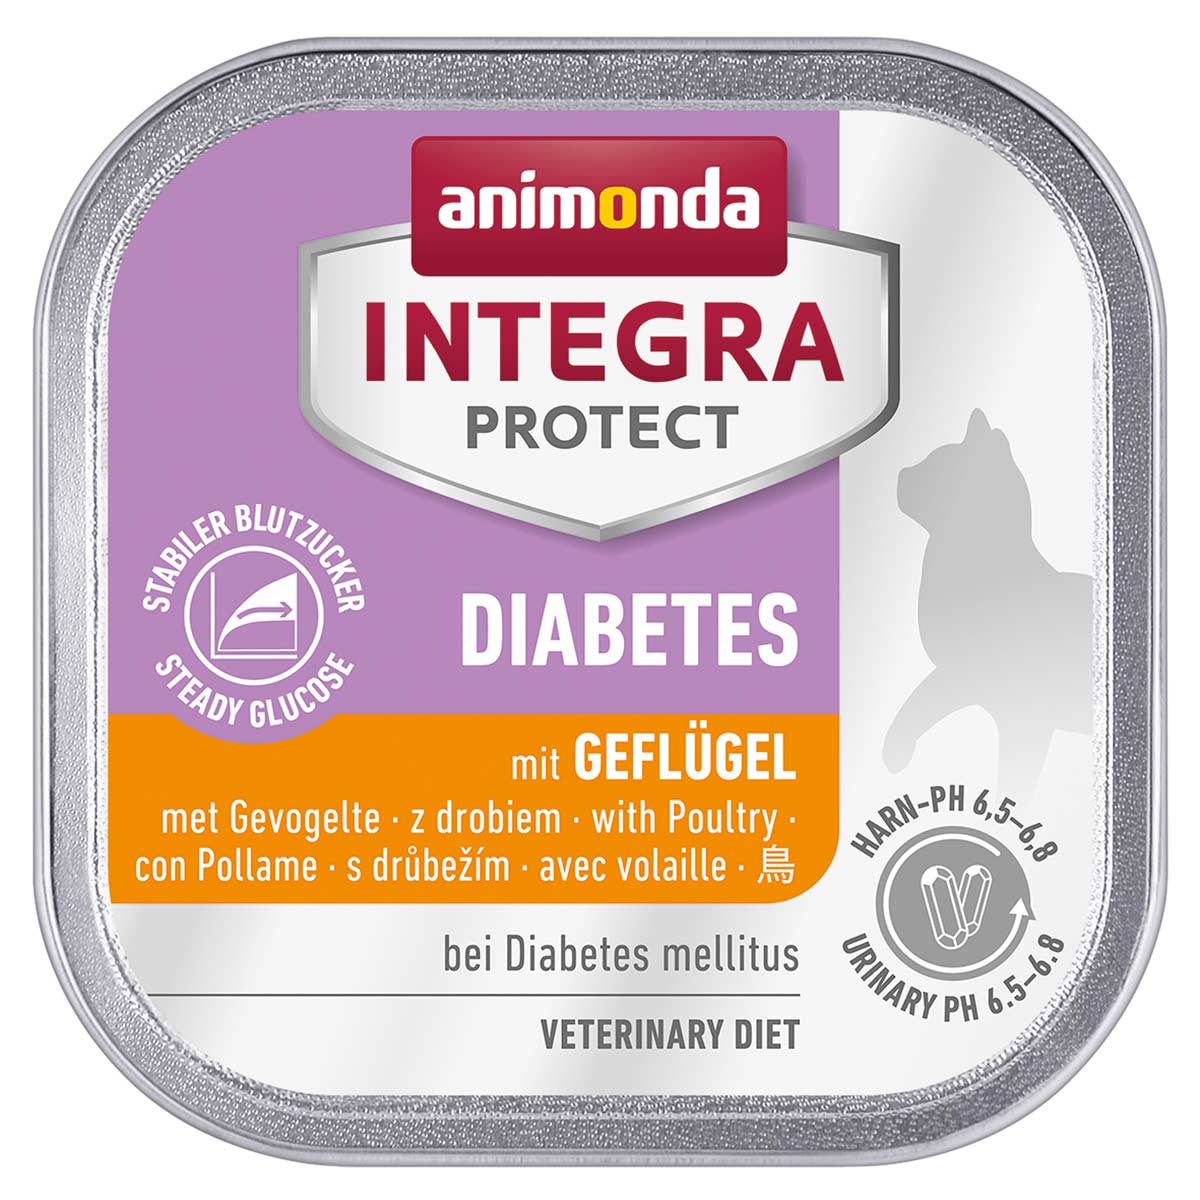 animonda INTEGRA PROTECT Diabetes mit Geflügel 32x100g